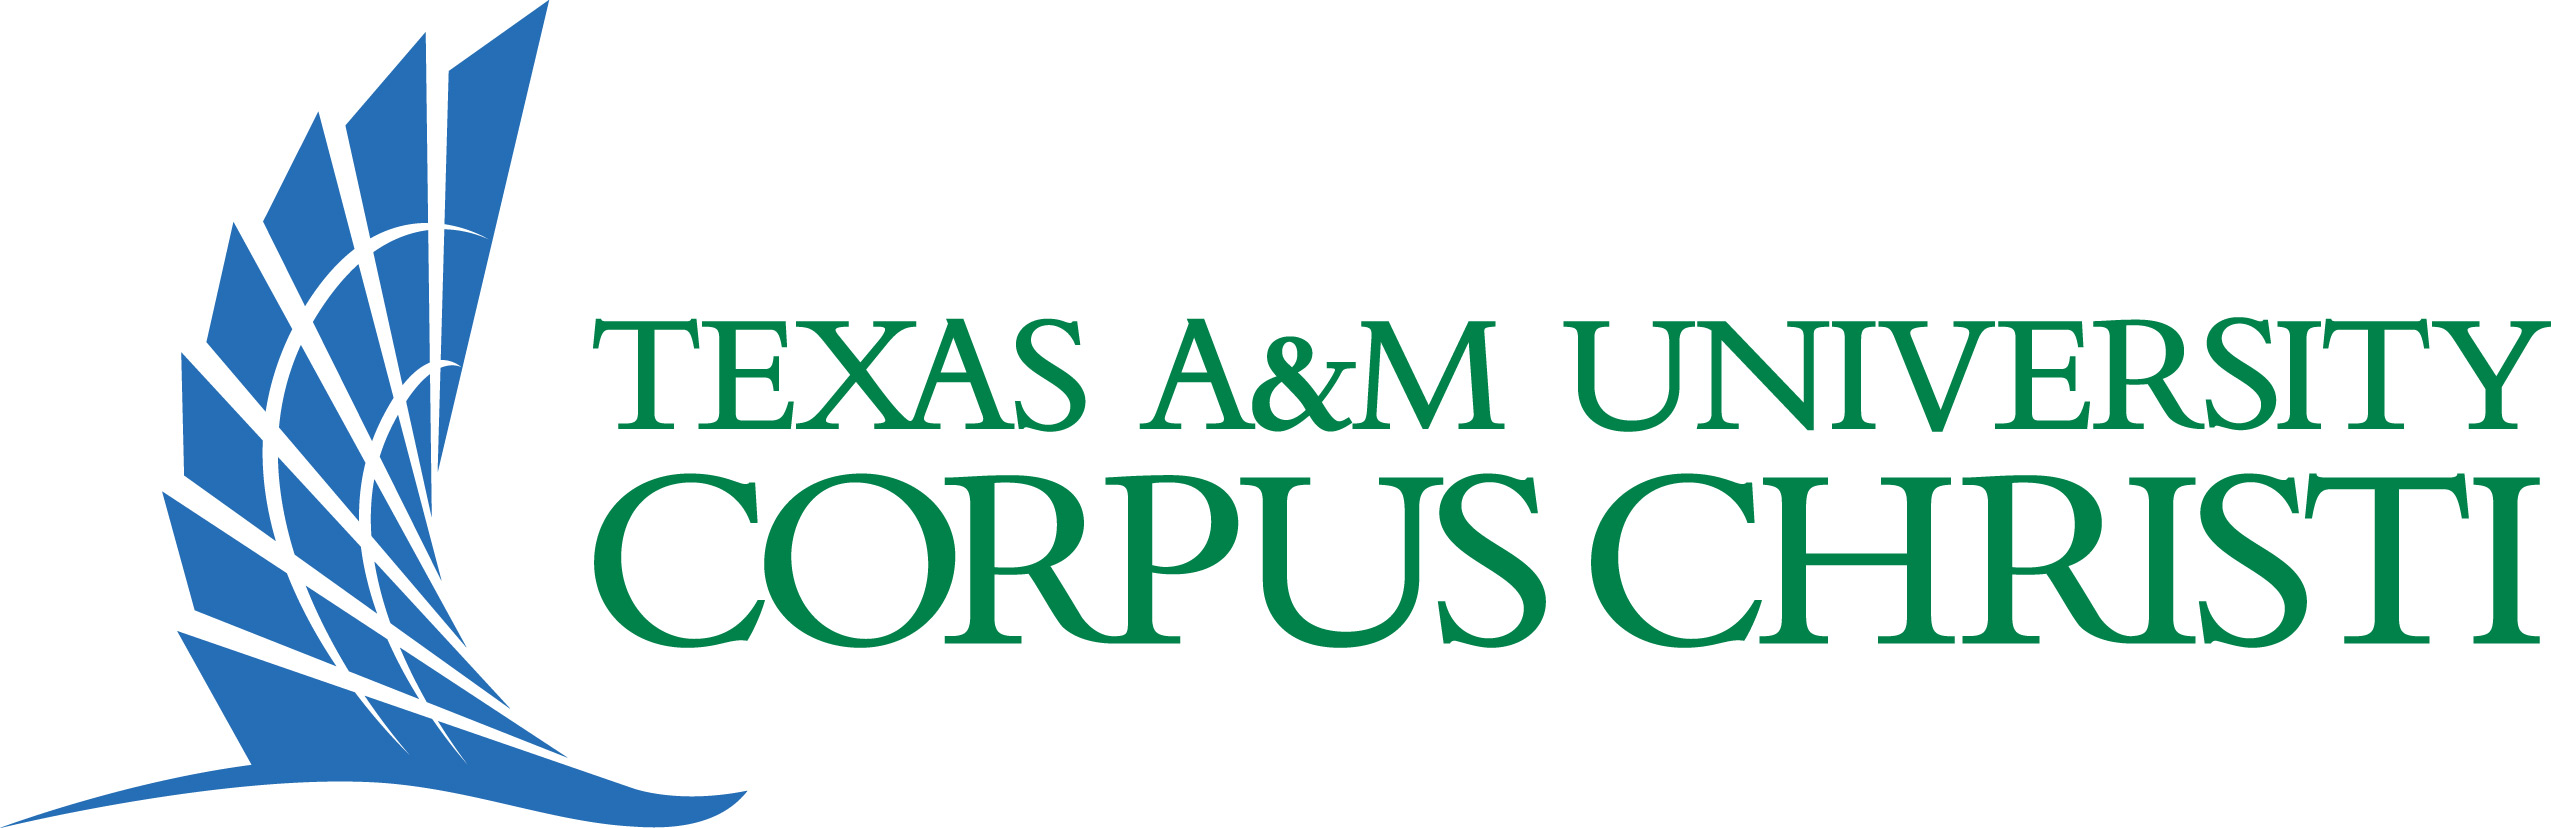 Texas A&M University Corpus Christi logo